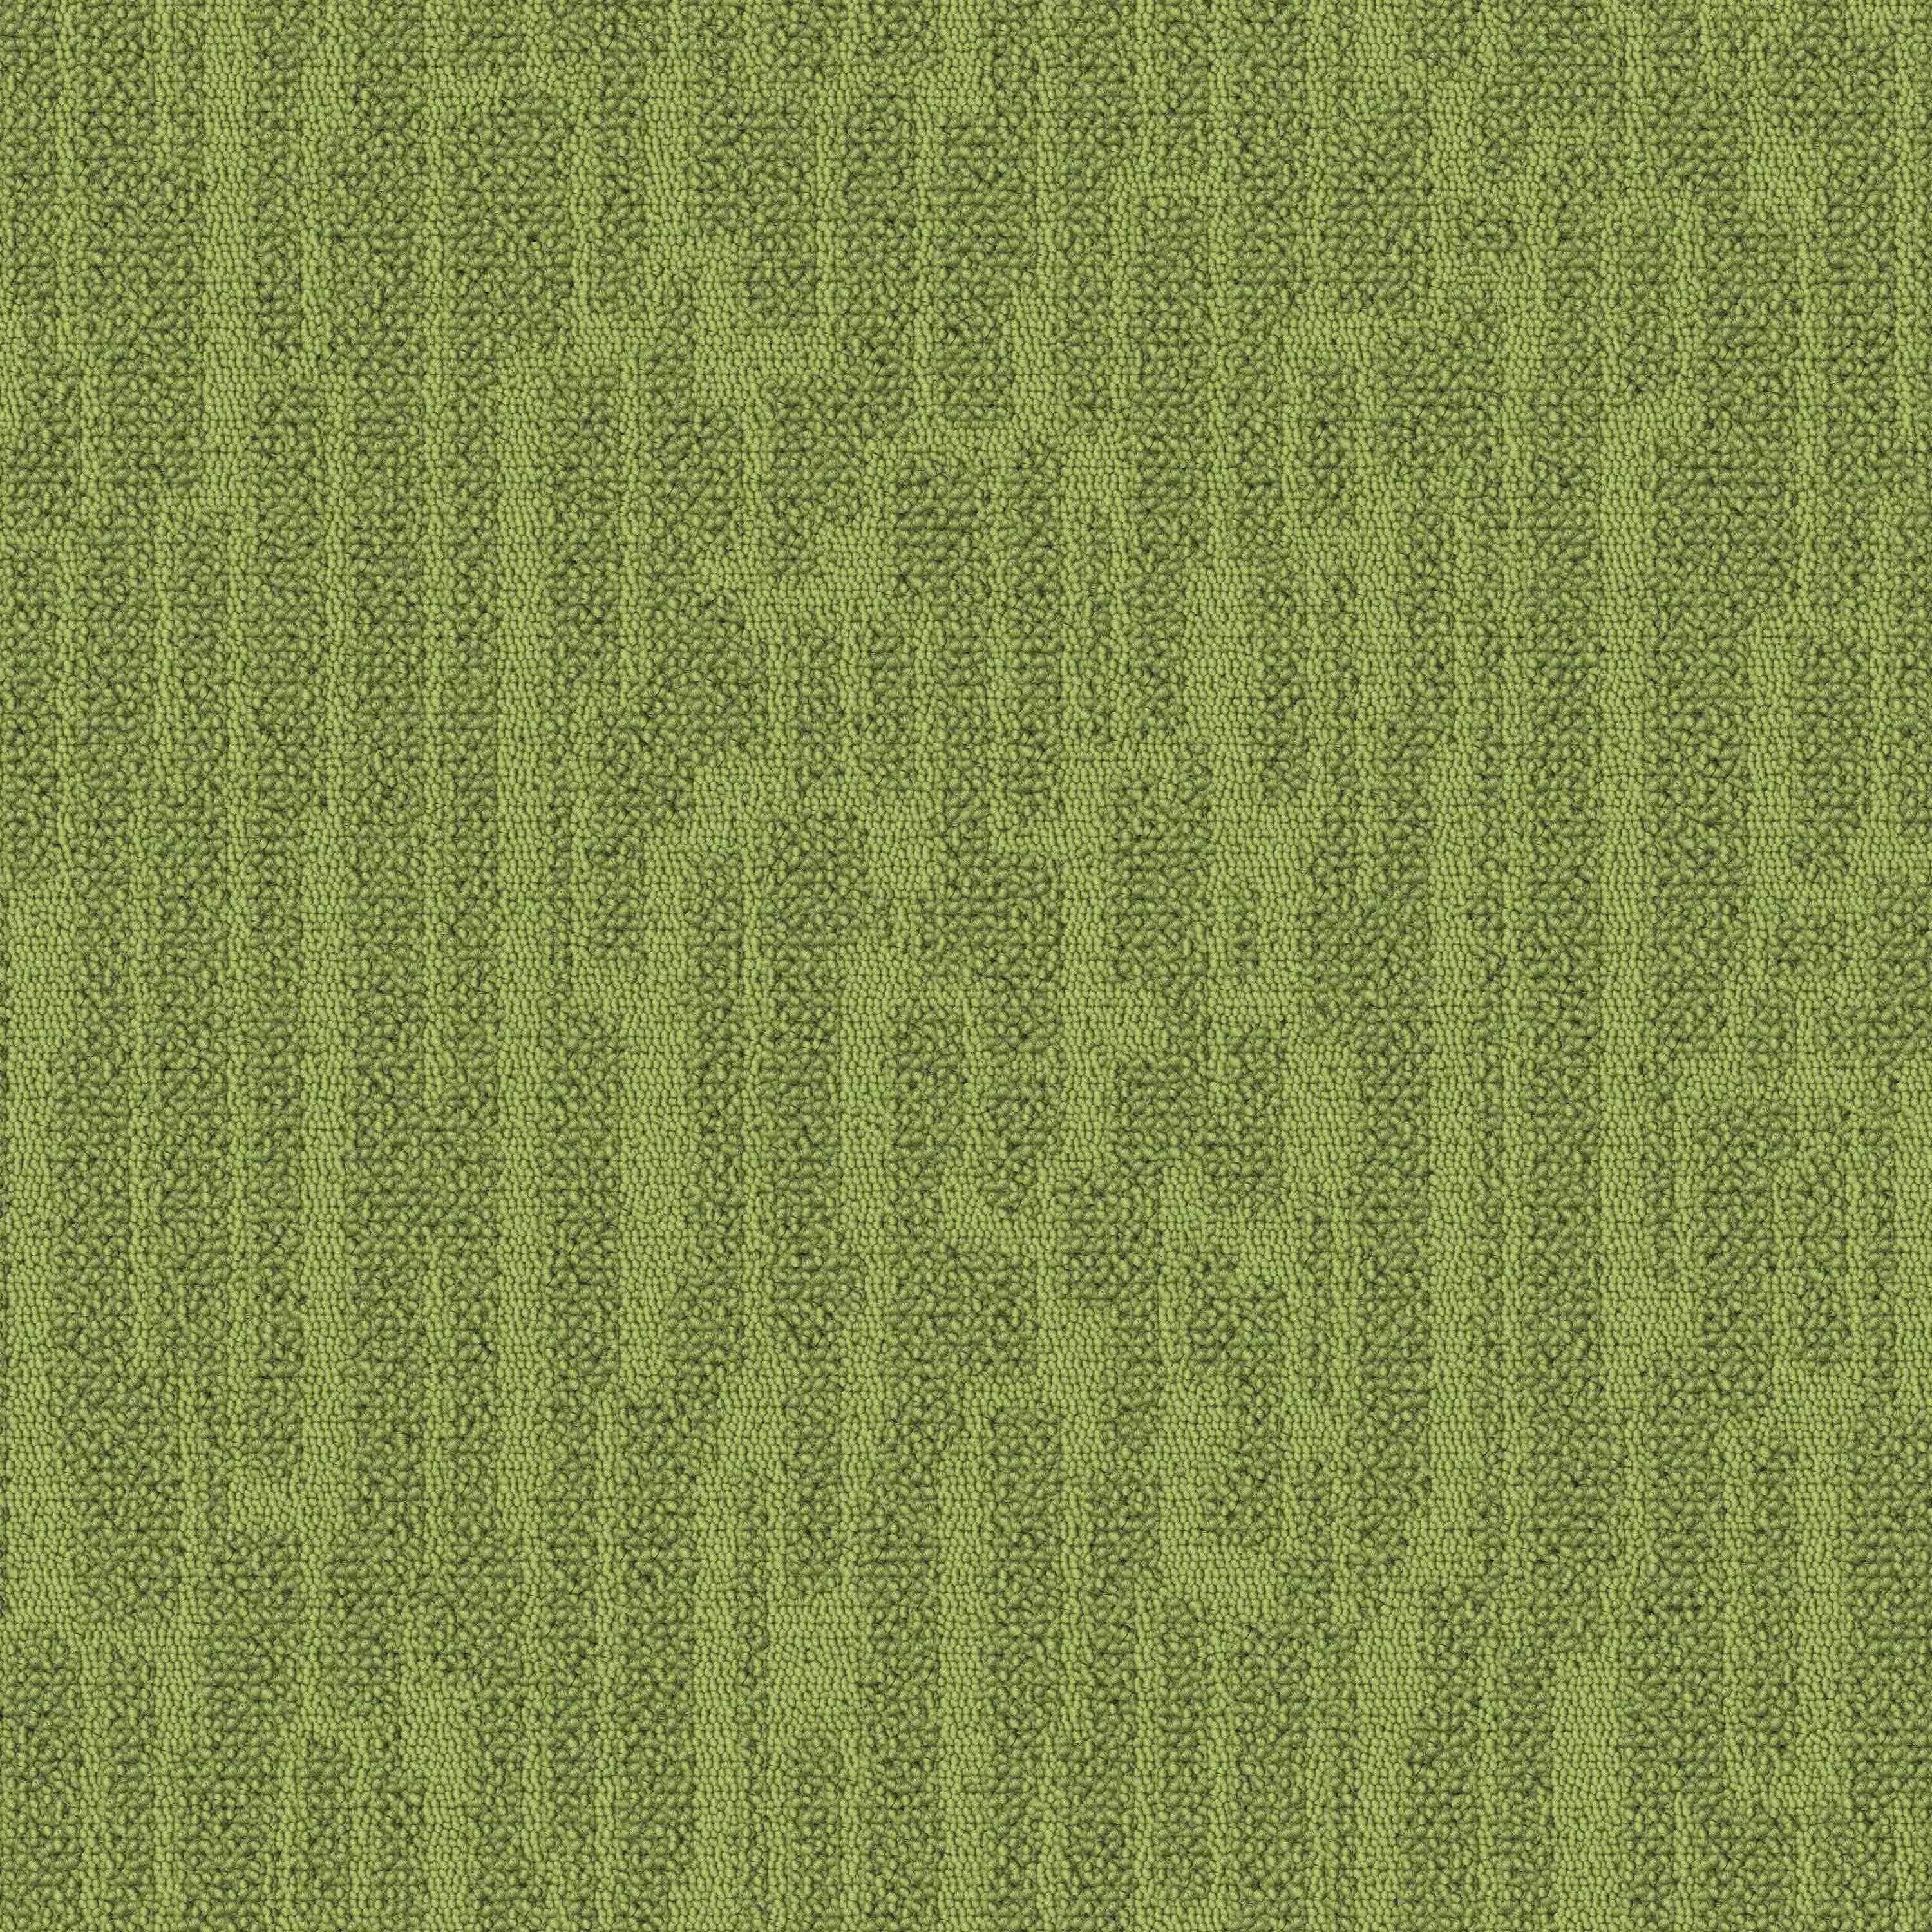 Paragon Inspiration Collection Greda Carpet Tile Lime Spring